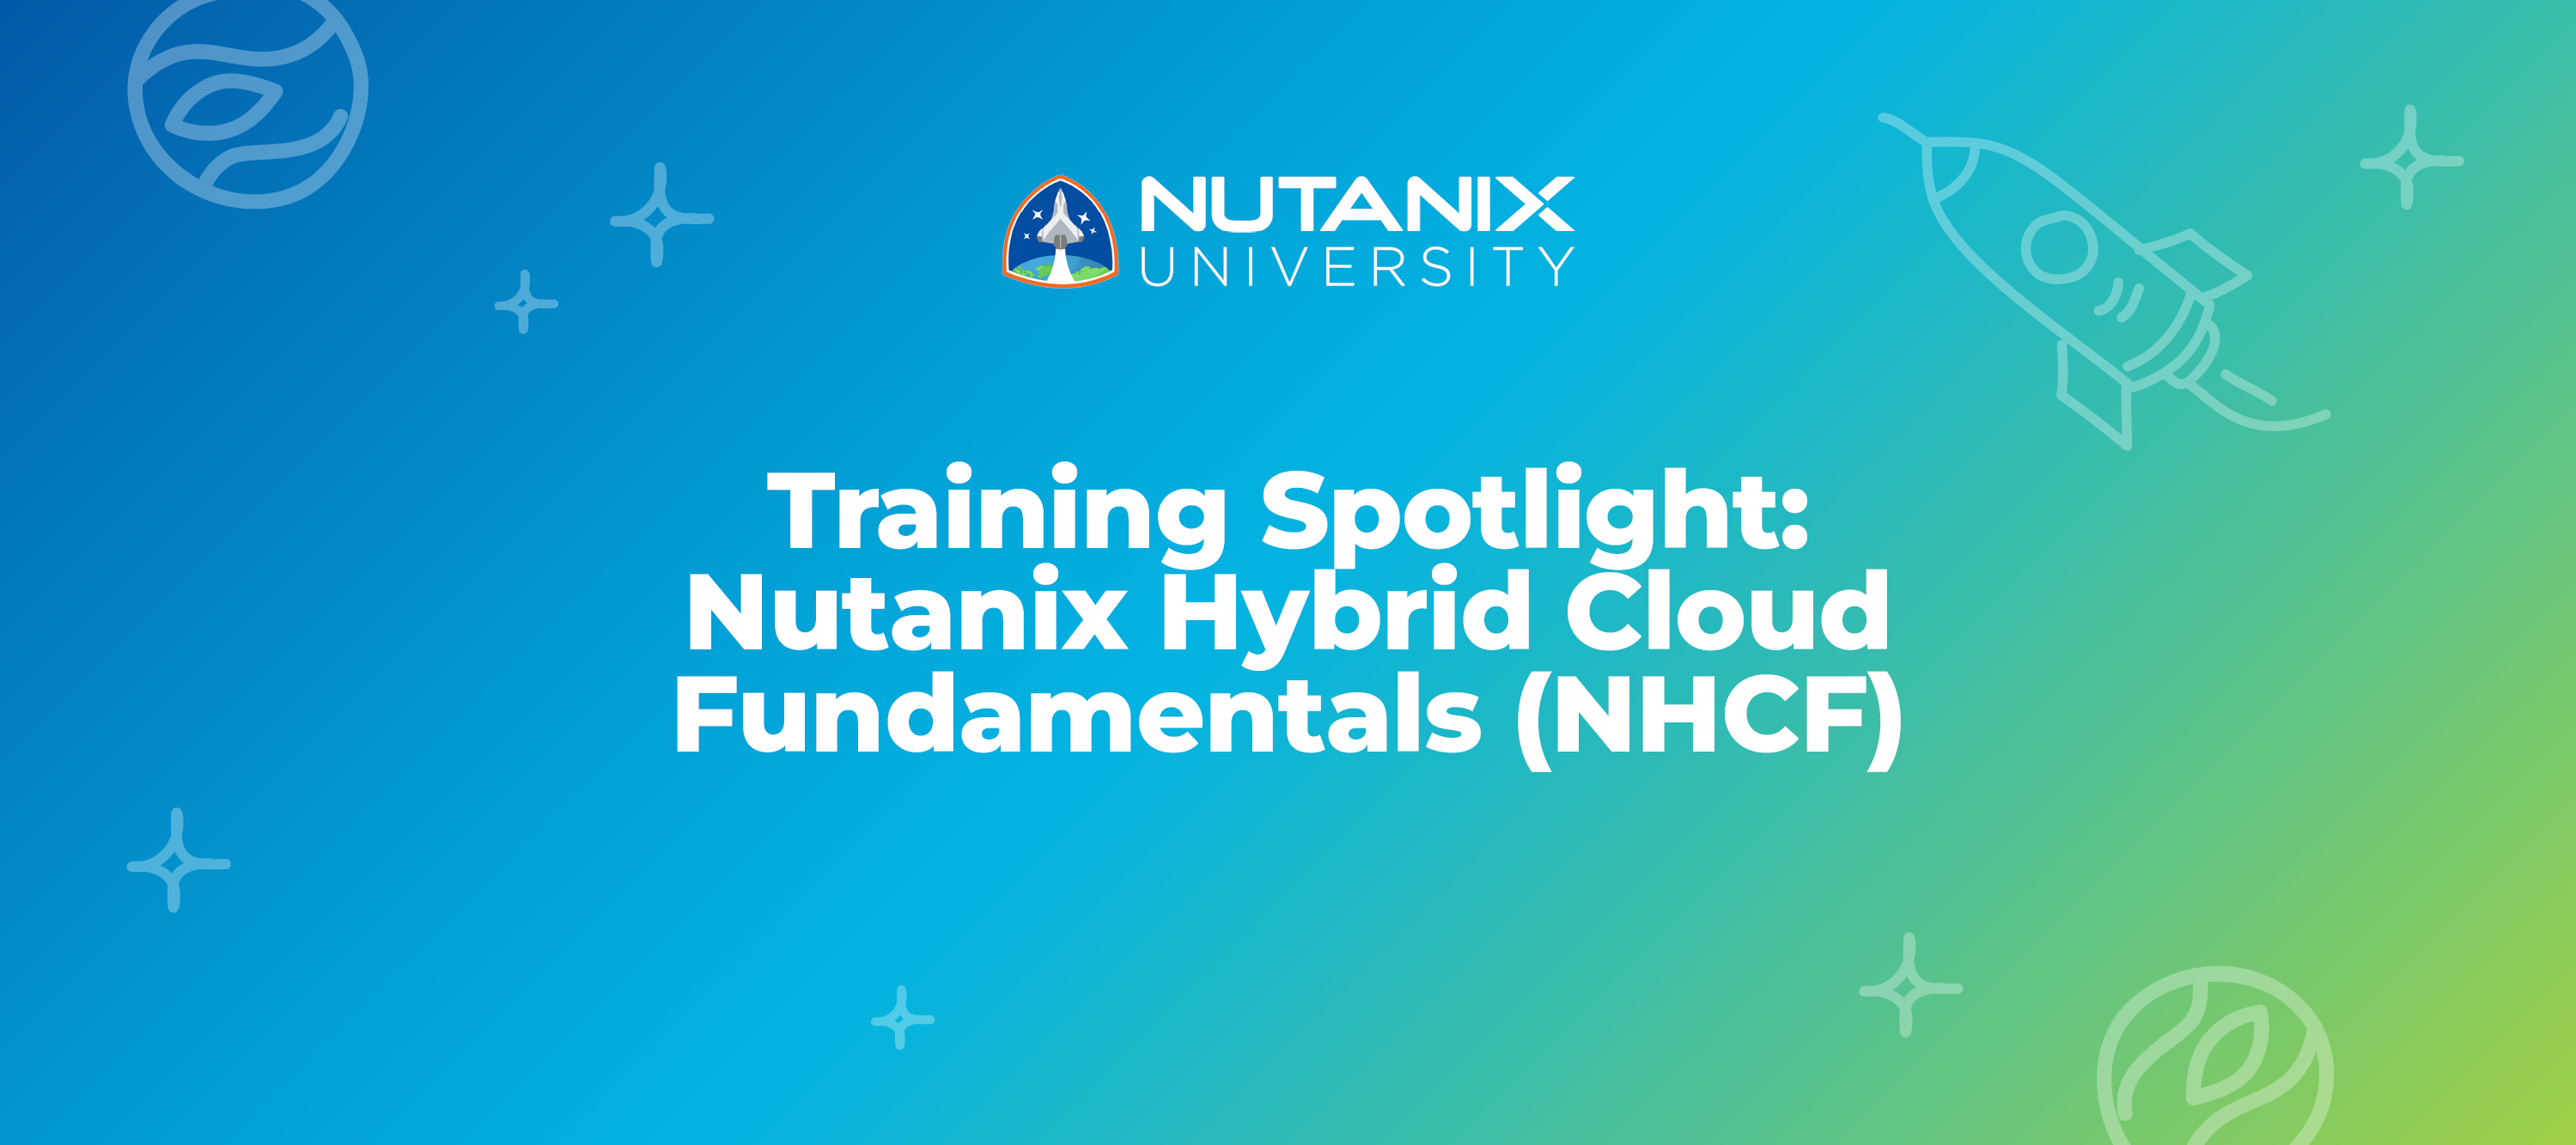 Training Spotlight: Nutanix Hybrid Cloud Fundamentals (NHCF)